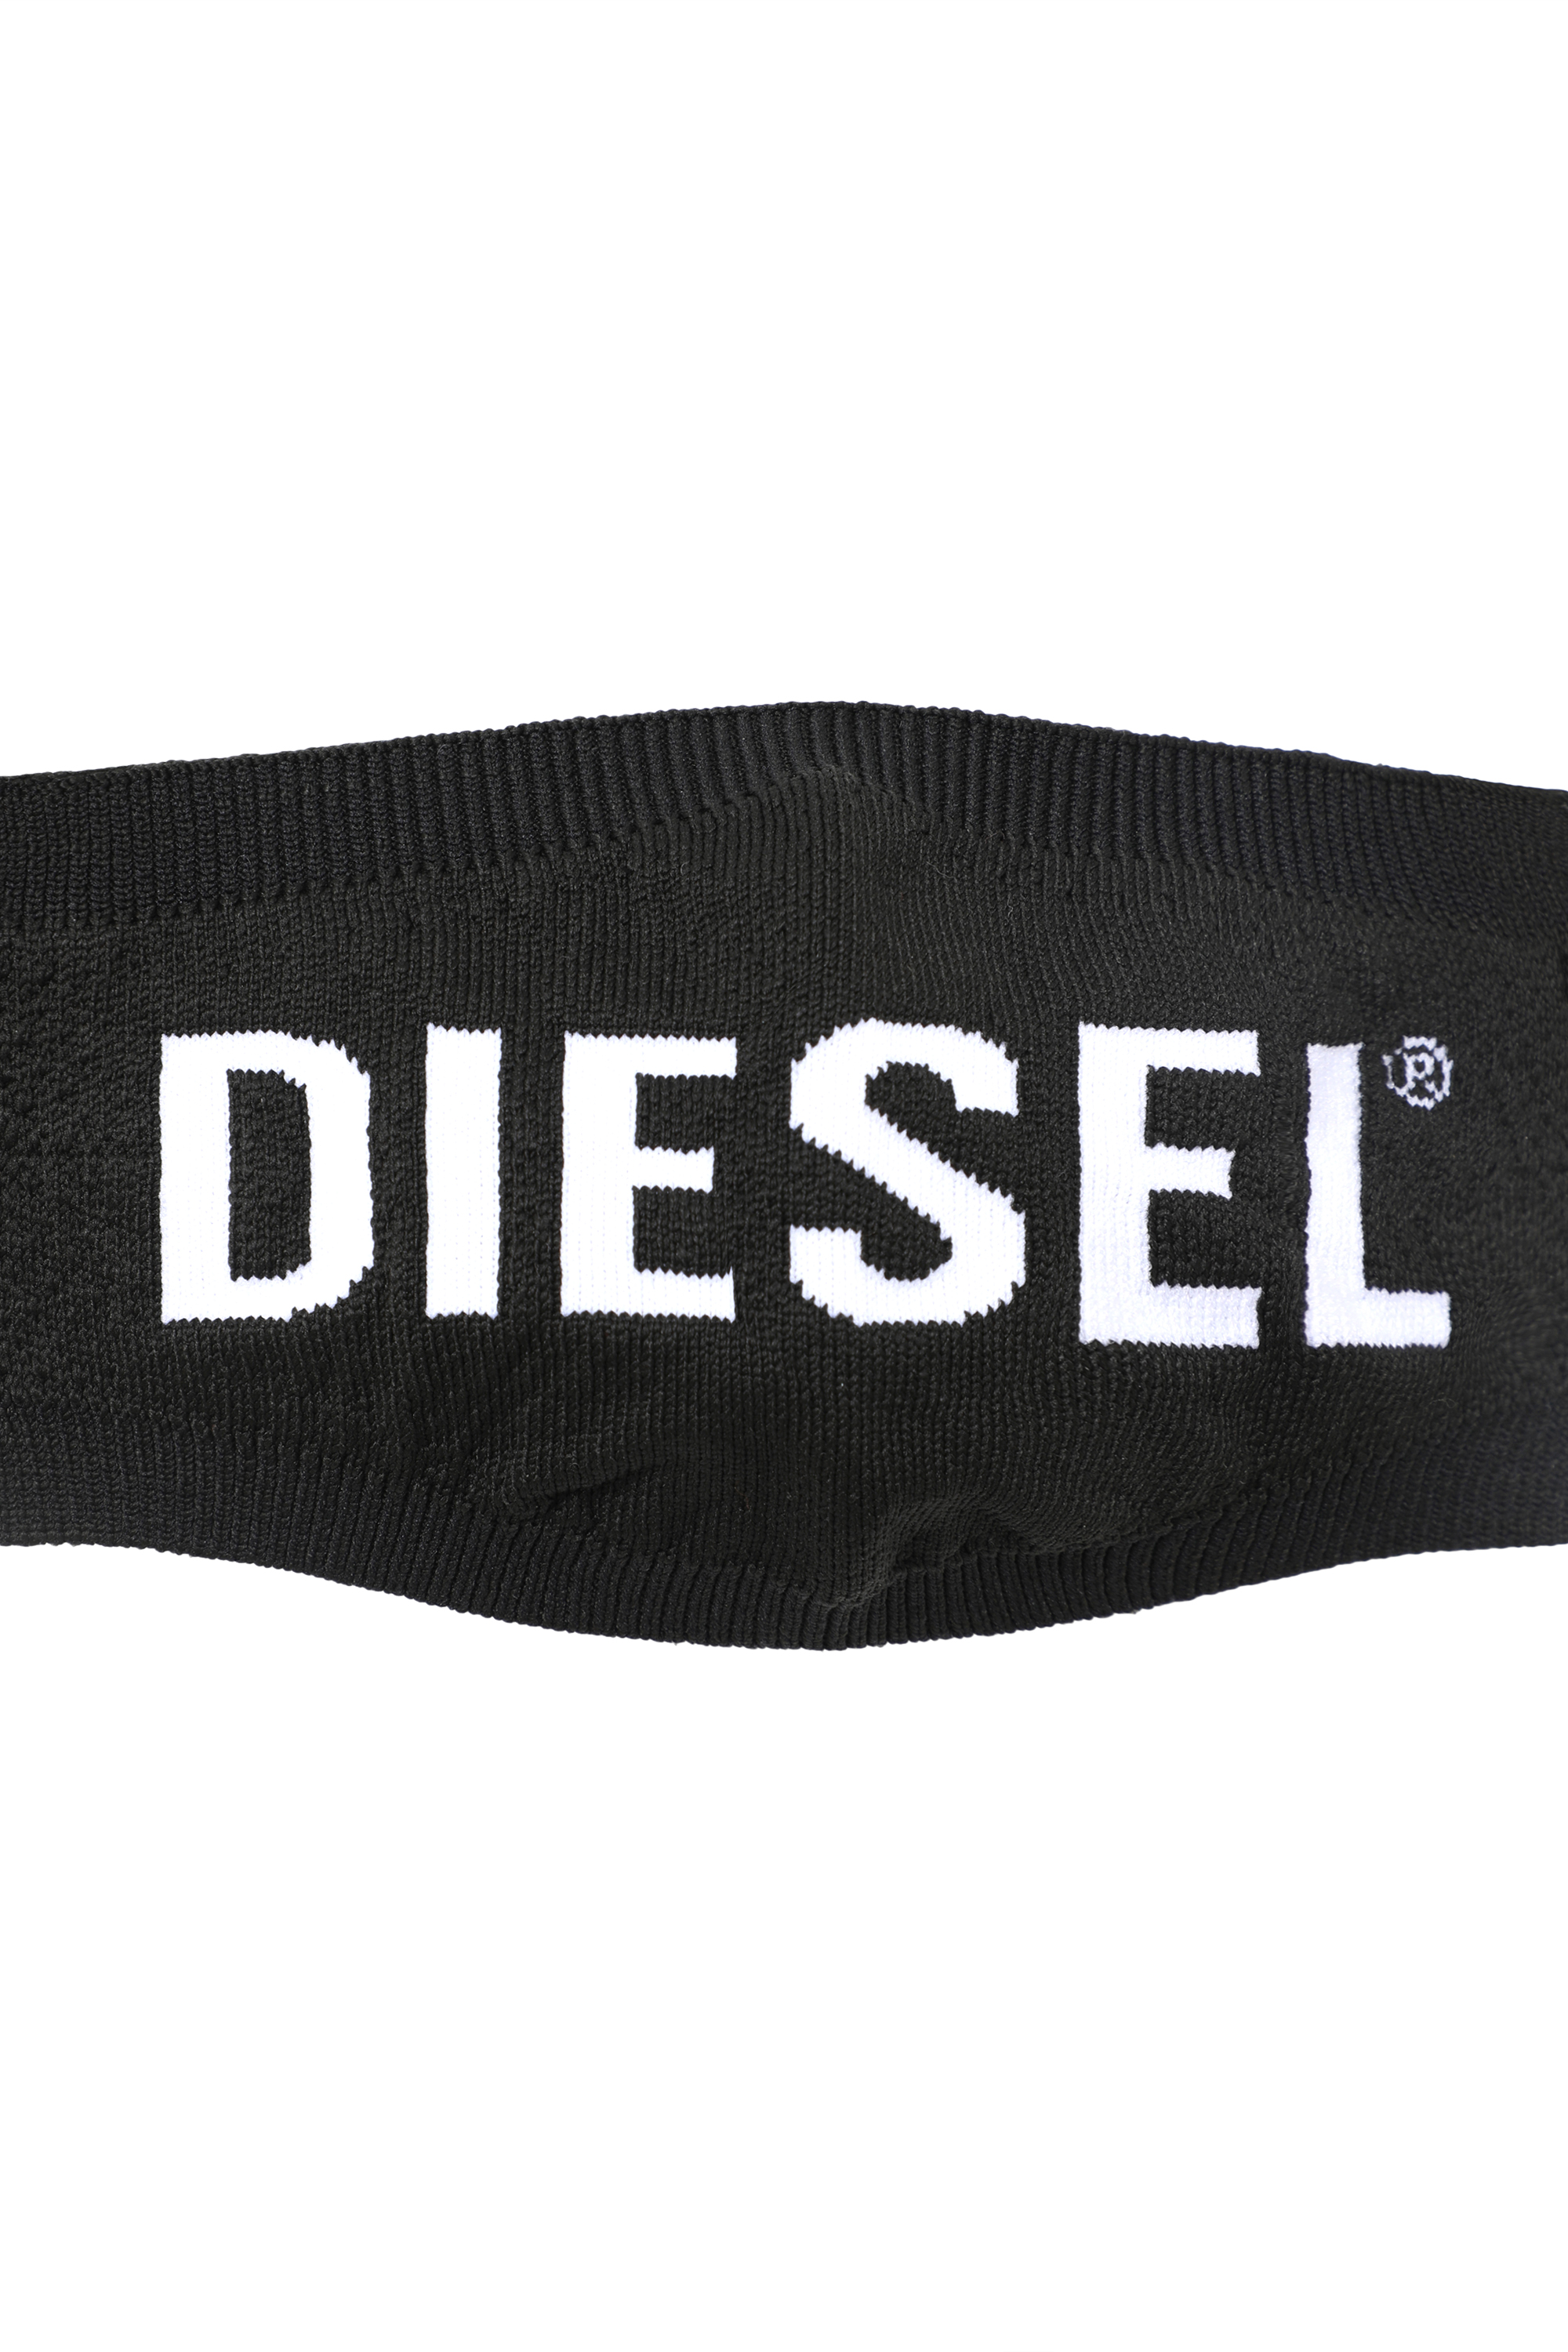 Diesel - VELIC, Black - Image 2